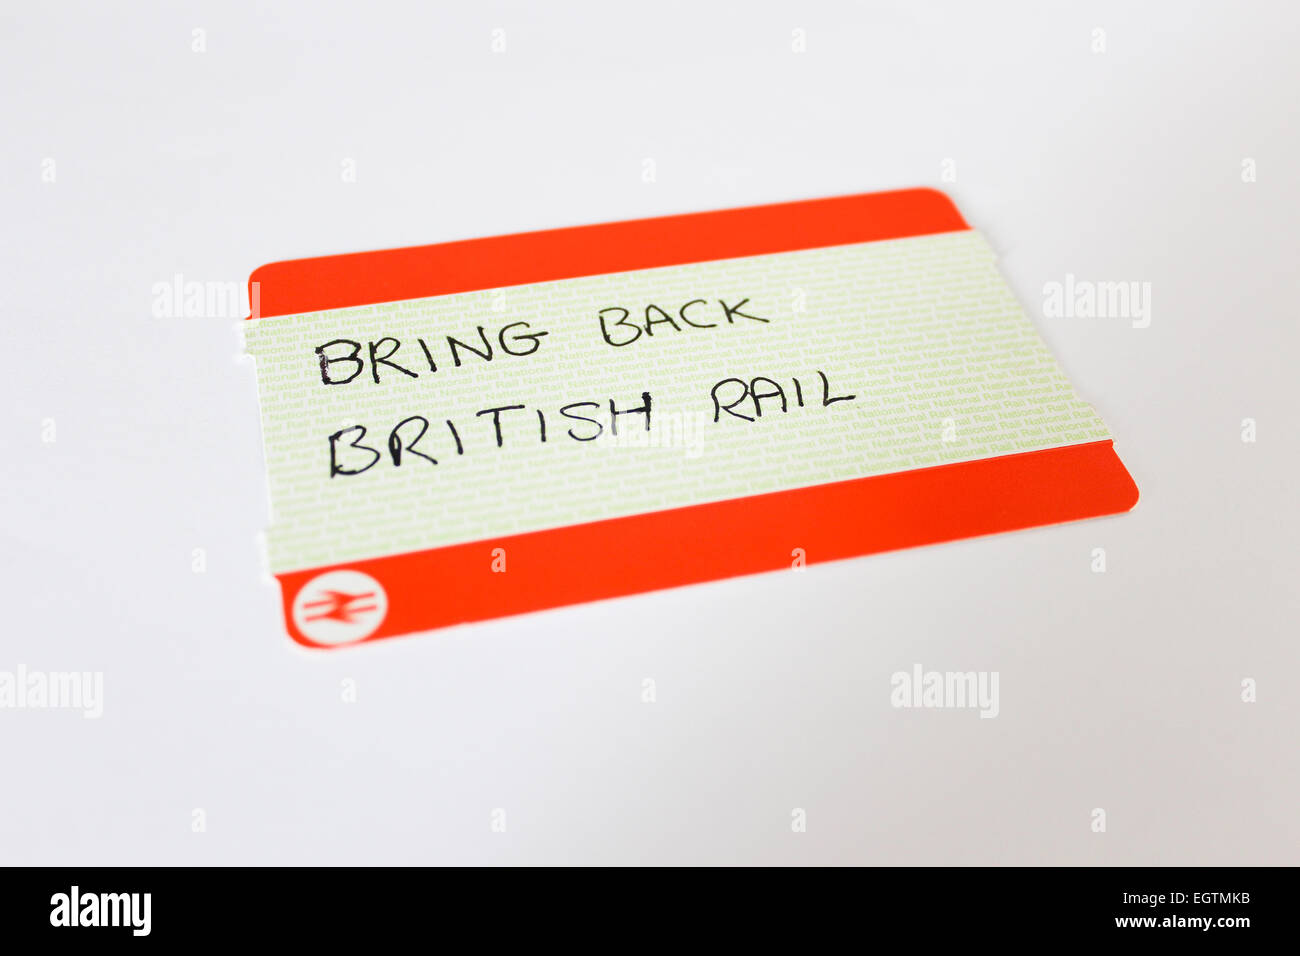 Bring Back British Rail Stock Photo